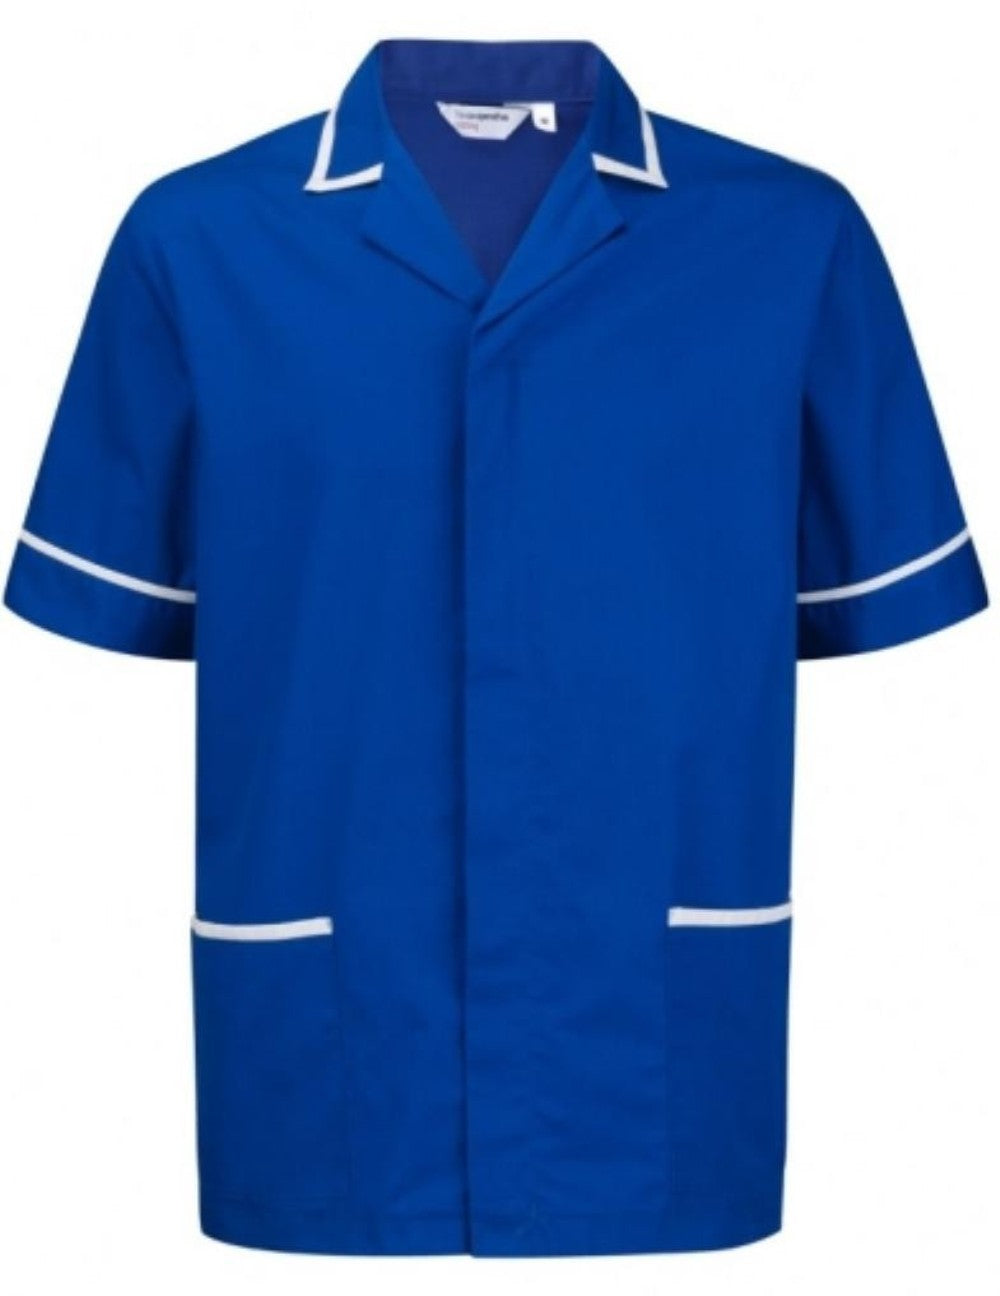 Male Poly Cotton Tunic FNMT01 | Size S to XXL | Royal Blue/White